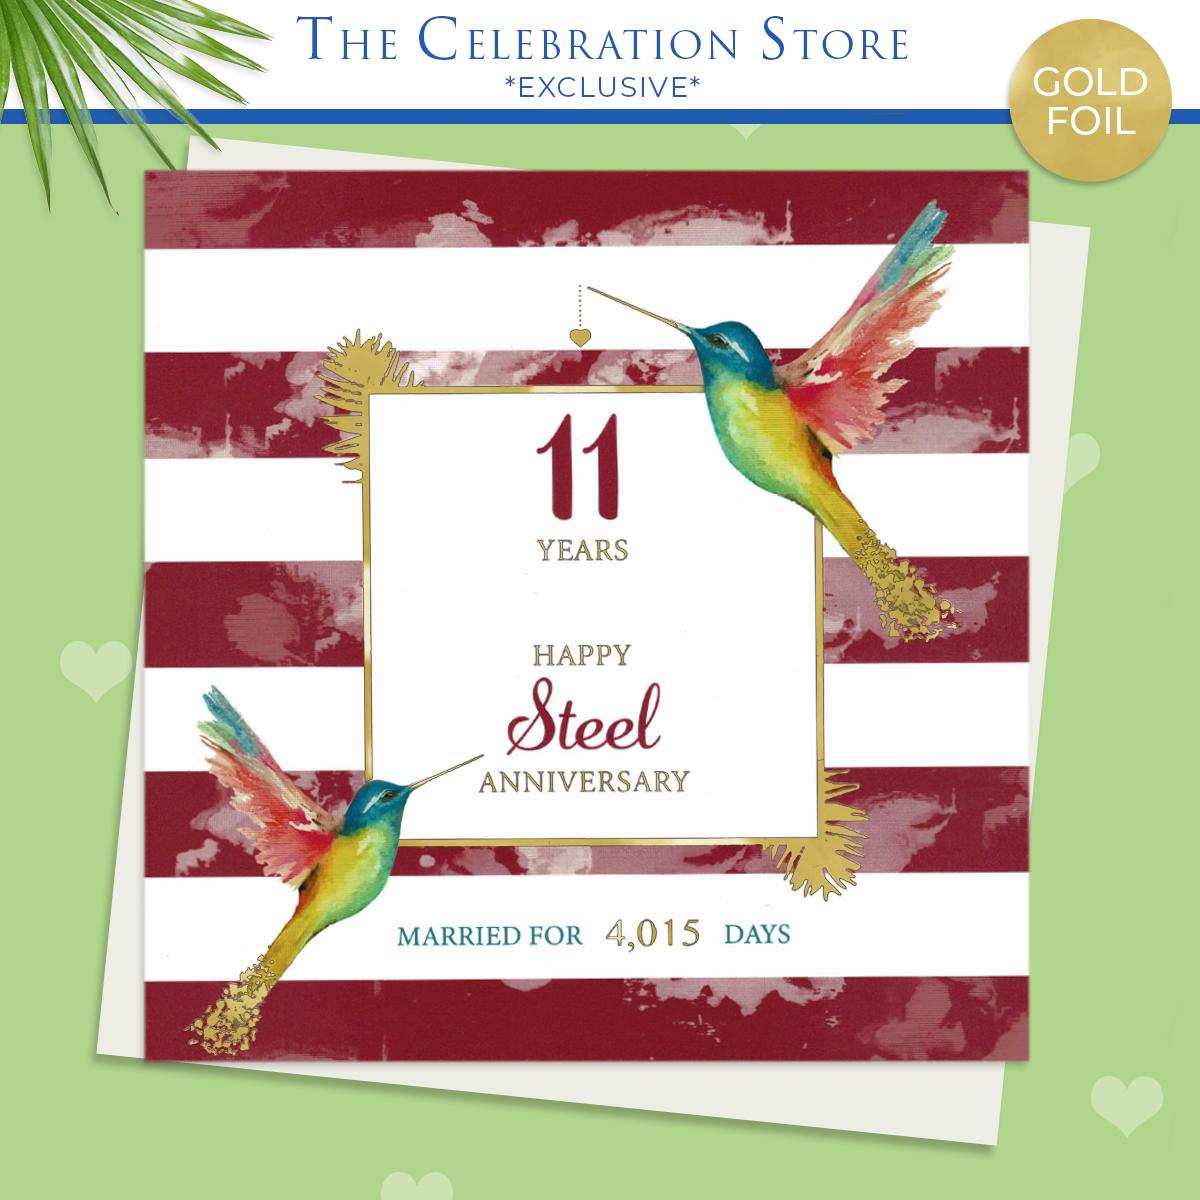 Beautiful Hummingbird Anniversary Card For Celebrating 11 Years Married